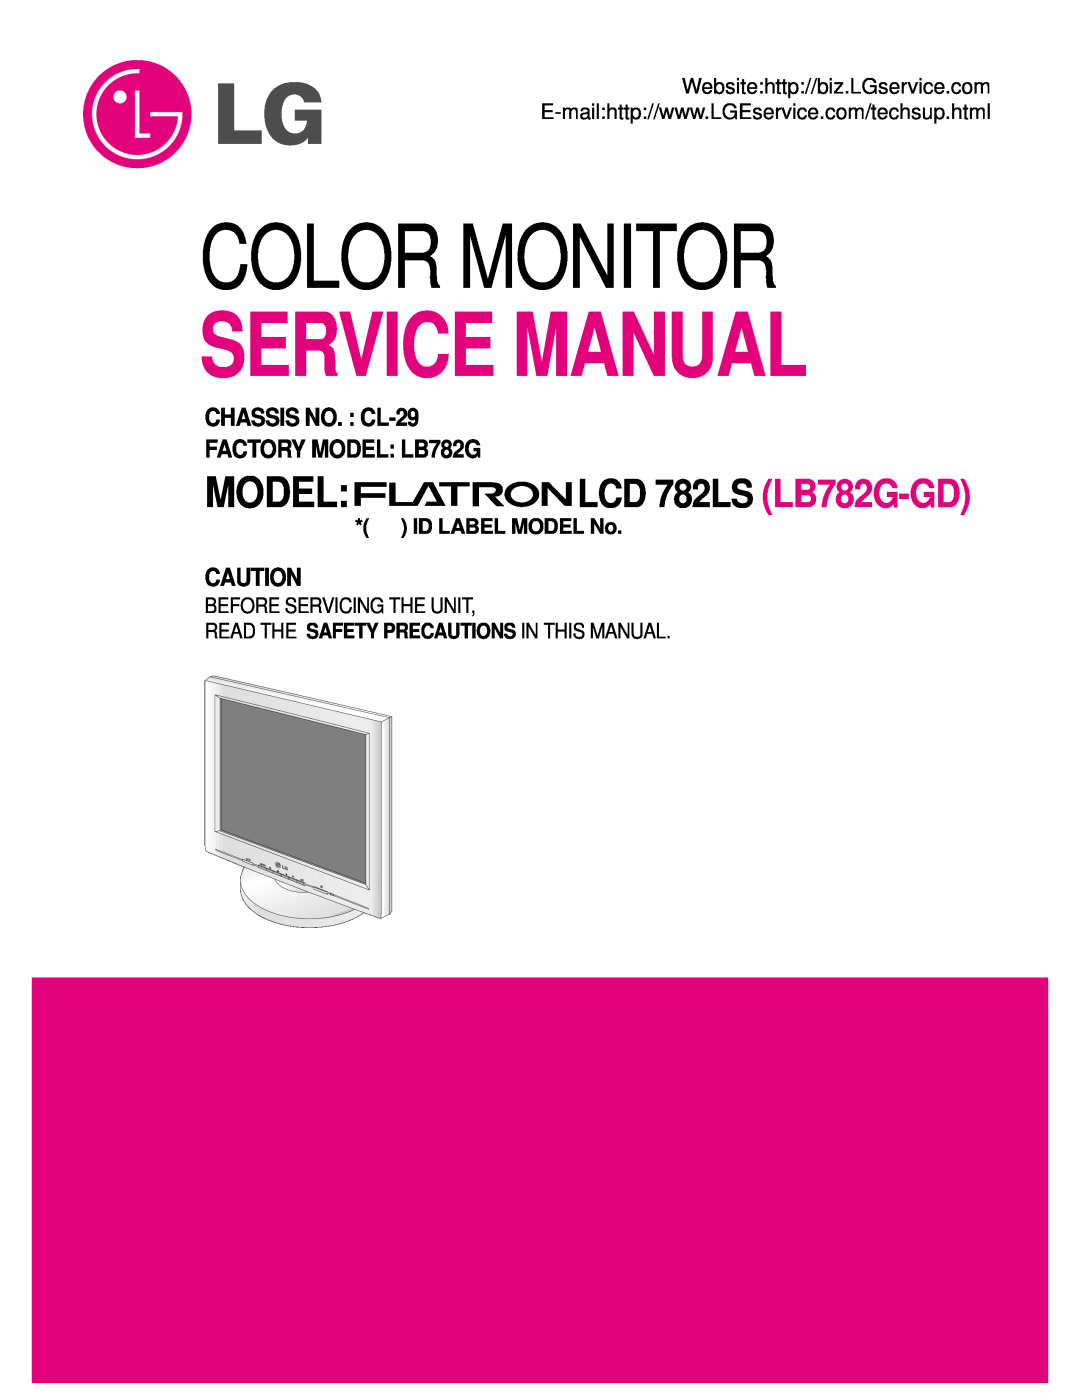 LG Electronics LCD 782LS service manual CHASSIS NO. CL-29 FACTORY MODEL LB782G, Websitehttp//biz.LGservice.com 